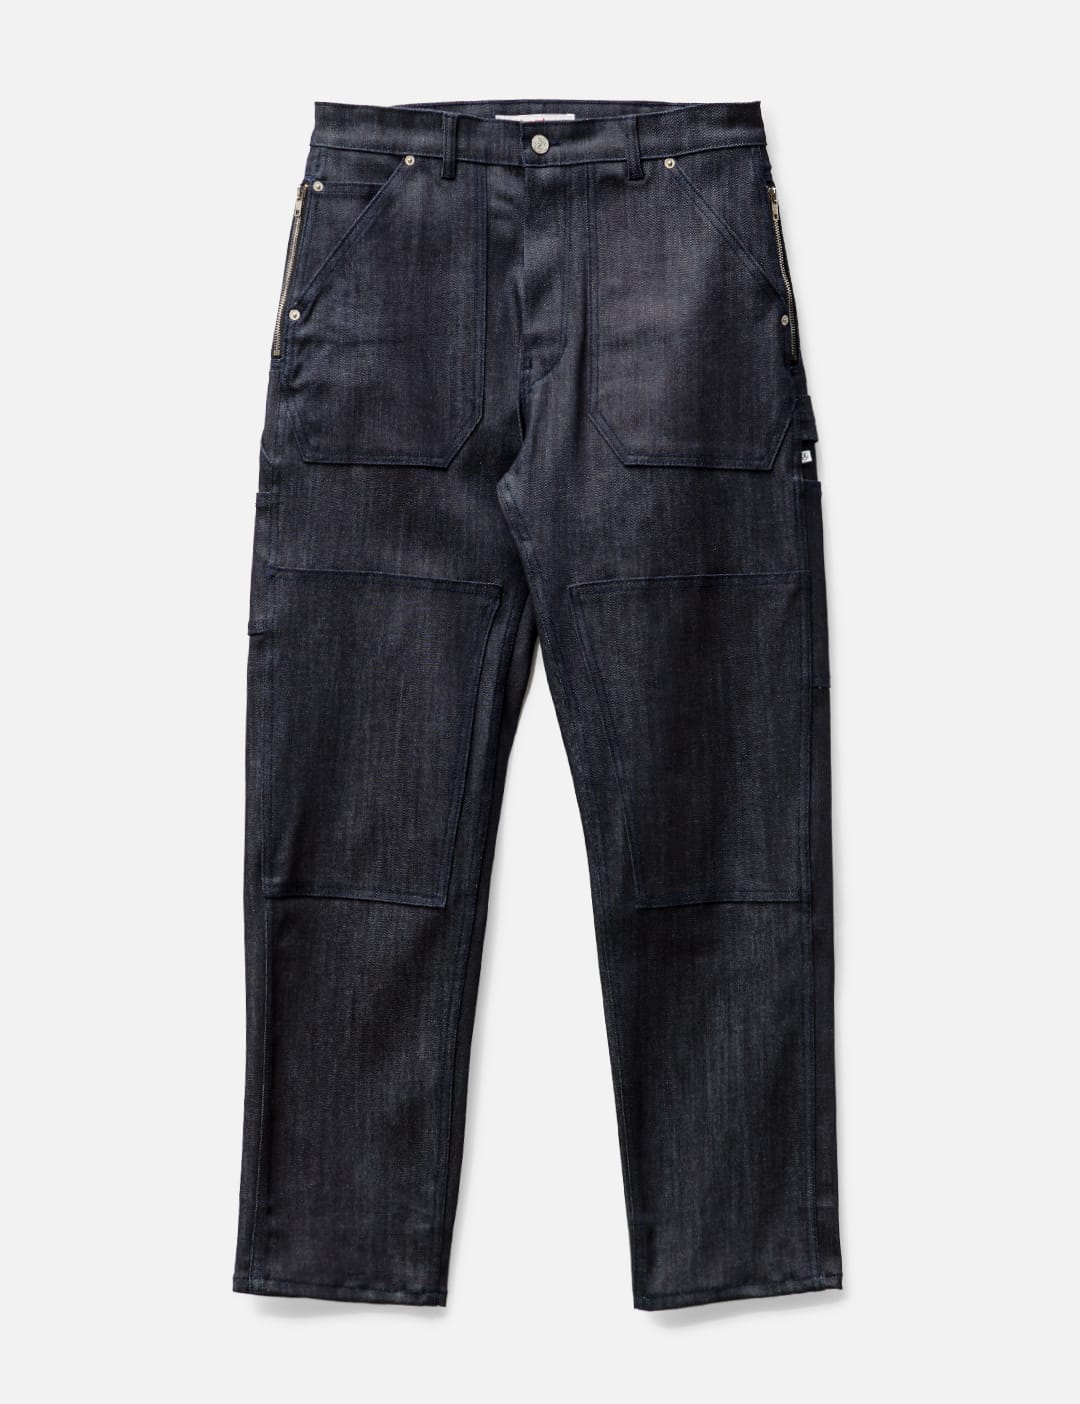 Plain Work Wear Denim Jeans, Blue at Rs 700/piece in Chennai | ID:  17890031633